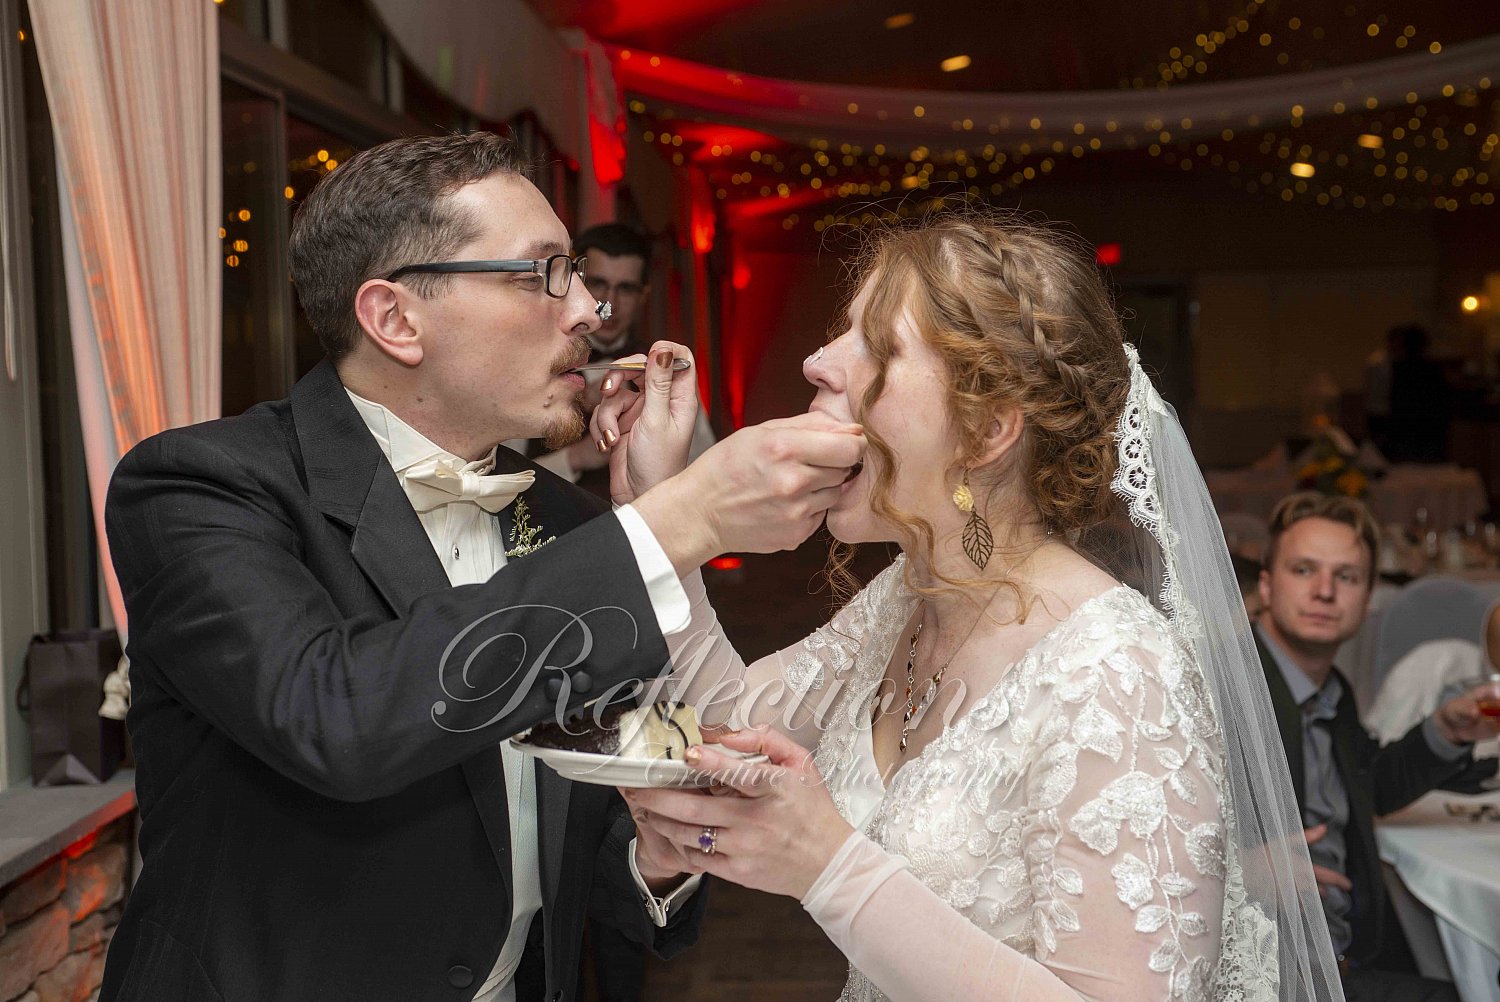 Not Your Vanilla Flavored Wedding 